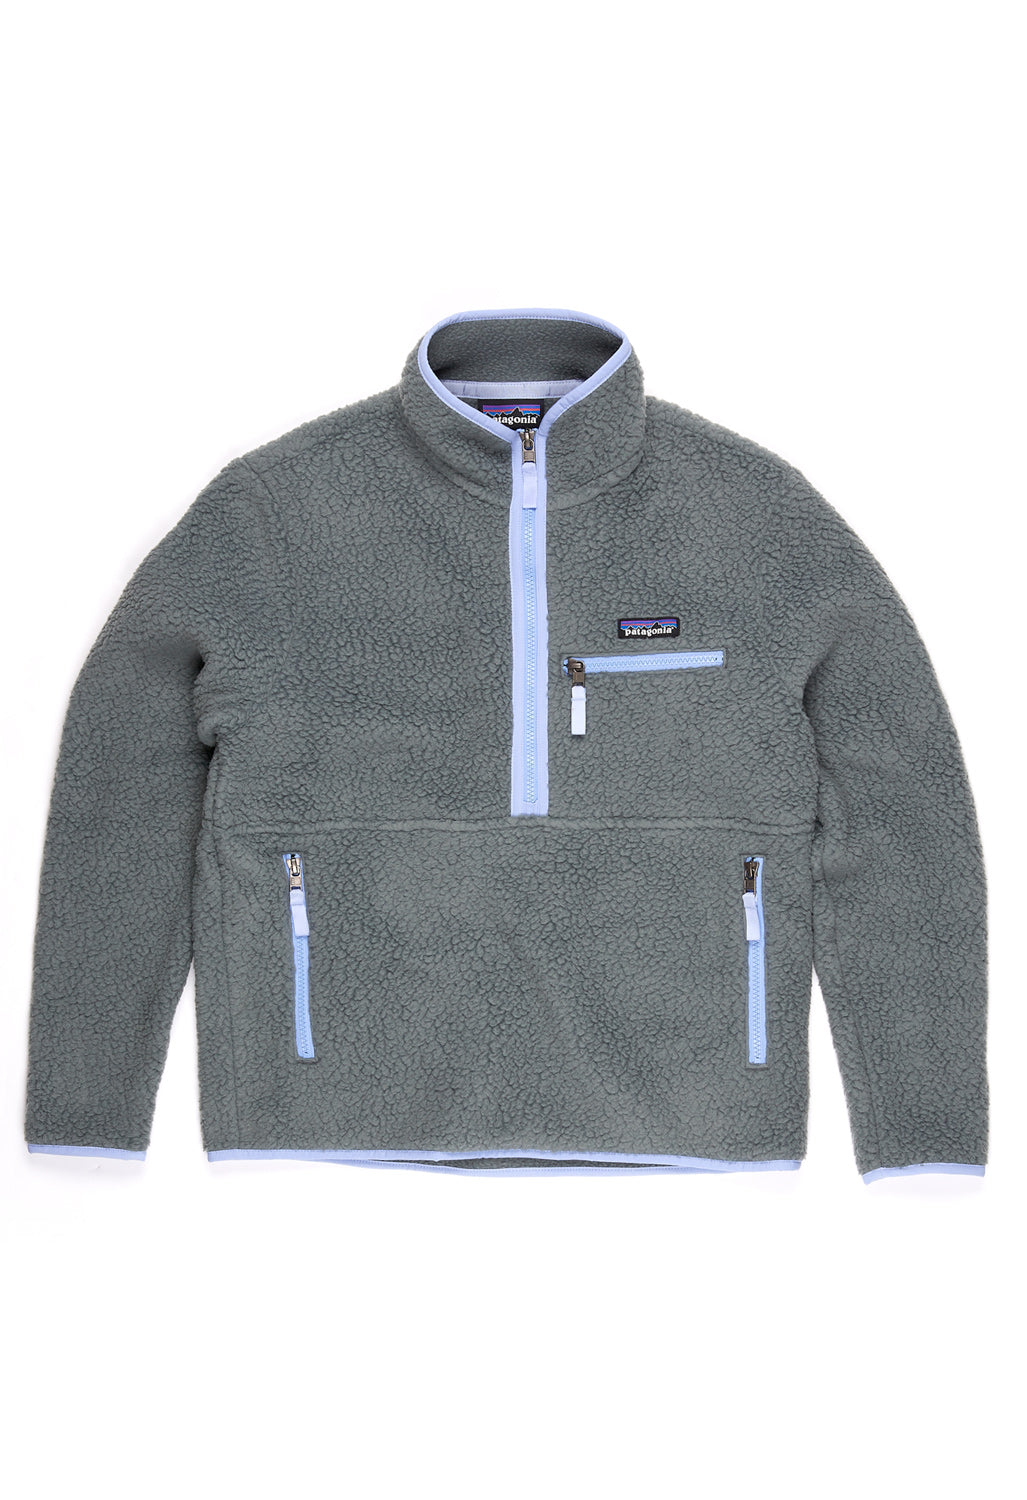 Patagonia M's Retro Pile JKT Sweatshirt, New Navy, XS Men's